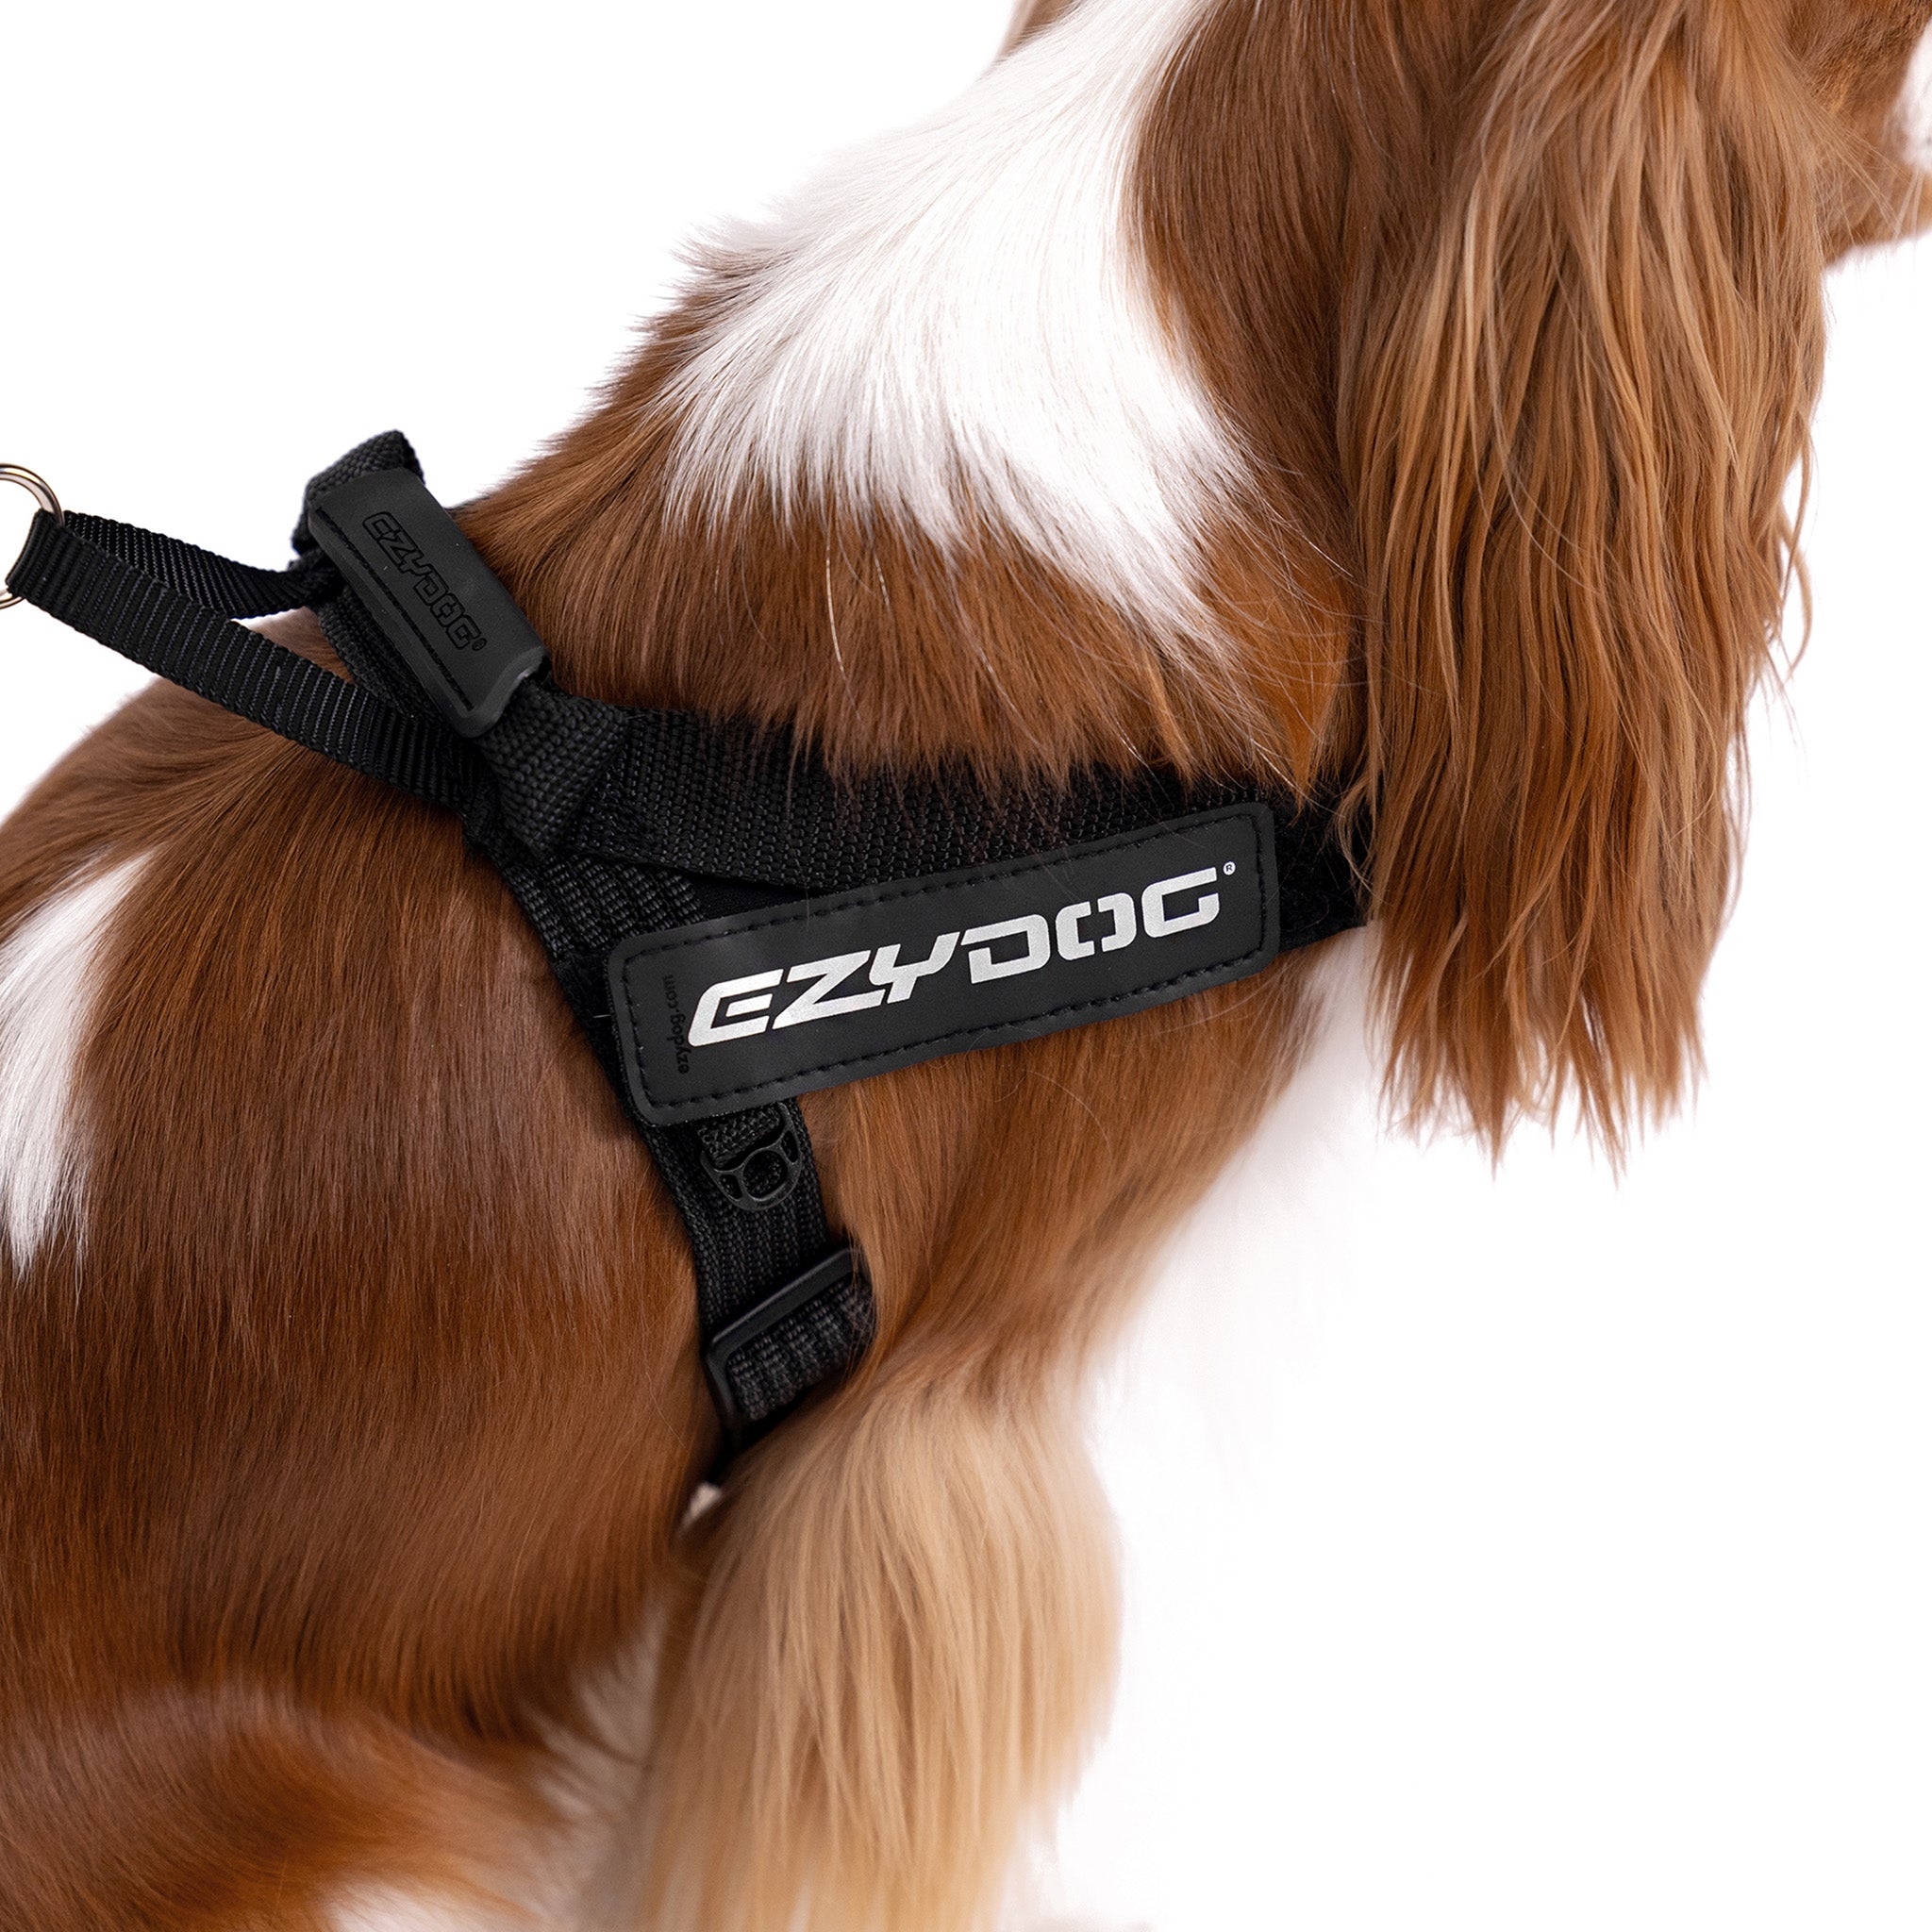 Express Dog Harness - Corduroy